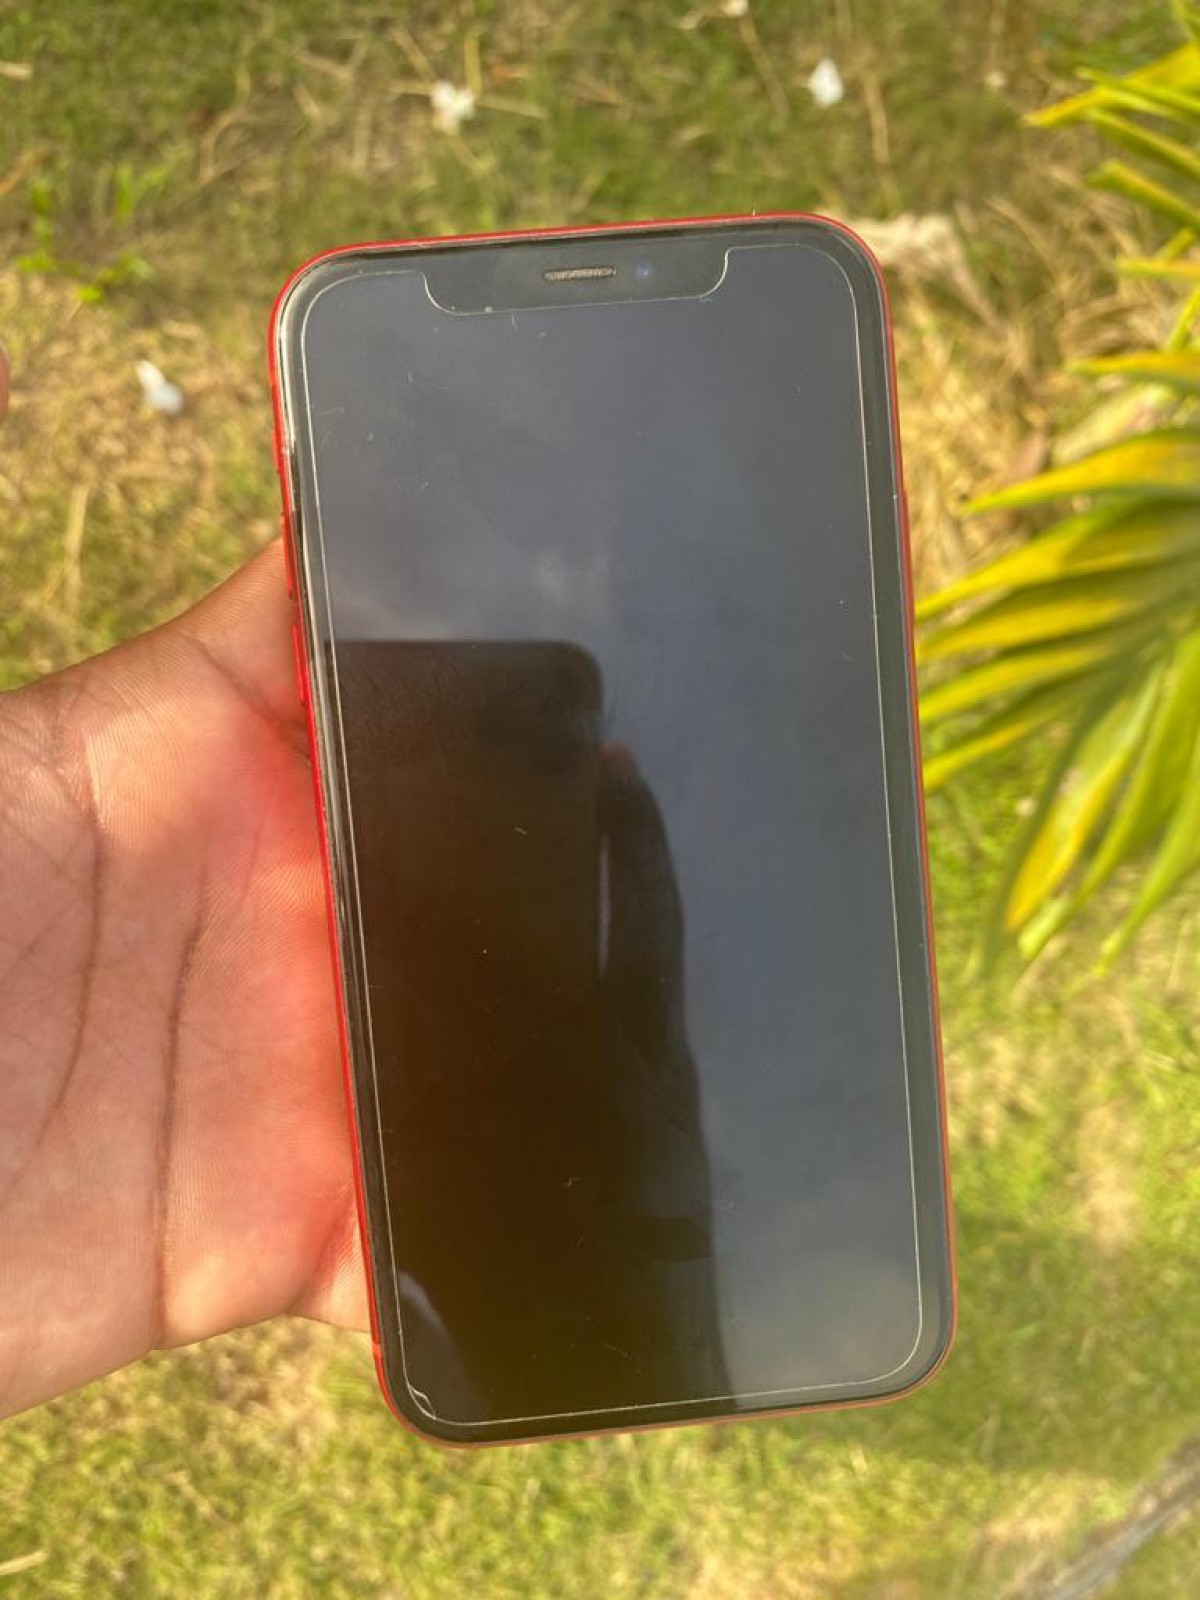 Week Old IPhone Xr Rsim Unlocked for sale in Kingston ...